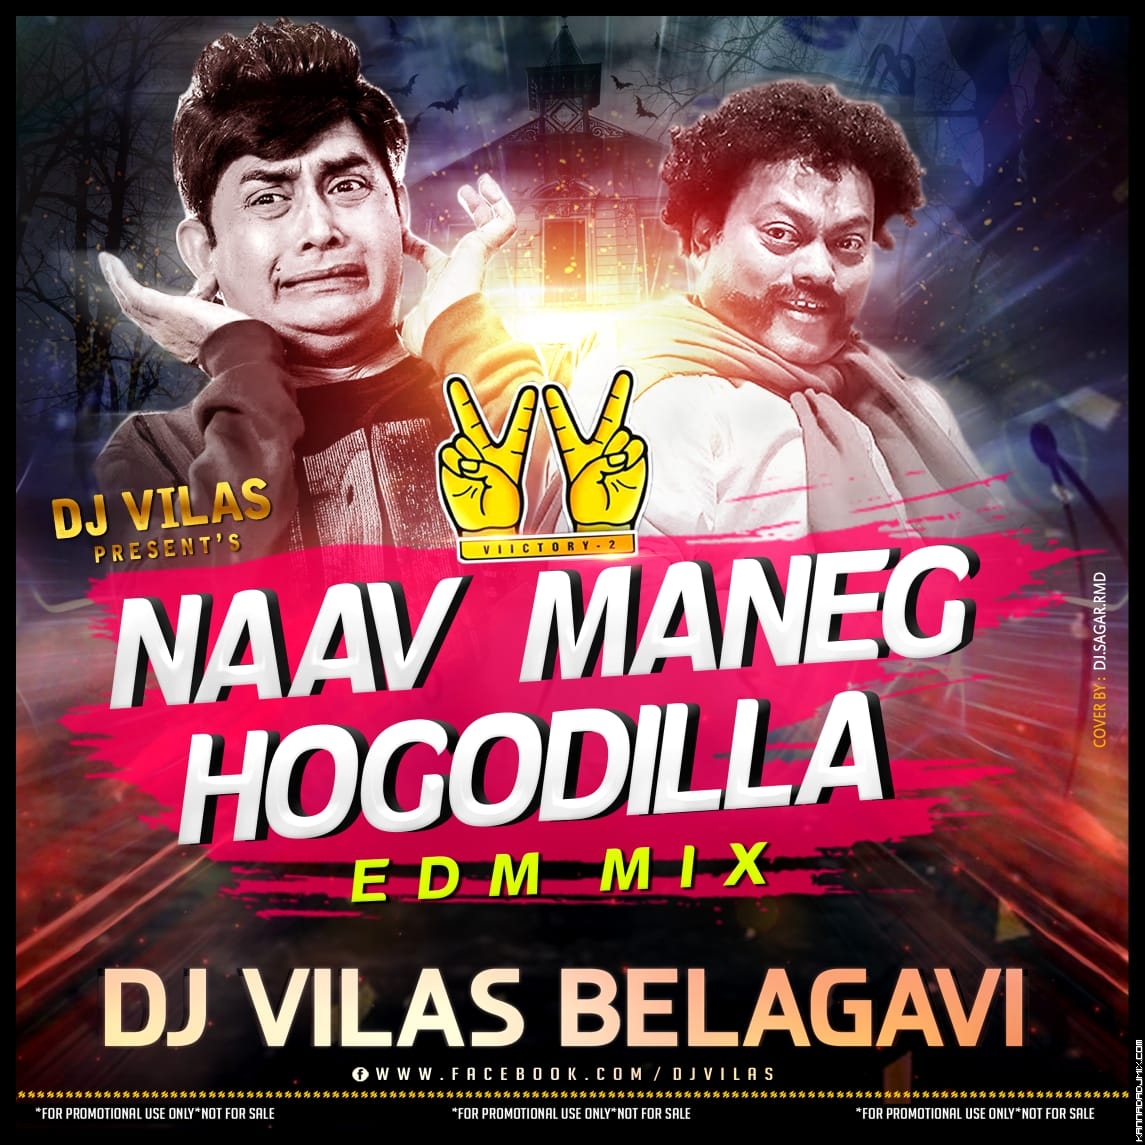 NAAV MANEGE HOGODILLA  EDM MIX DJ VILAS BGM.mp3